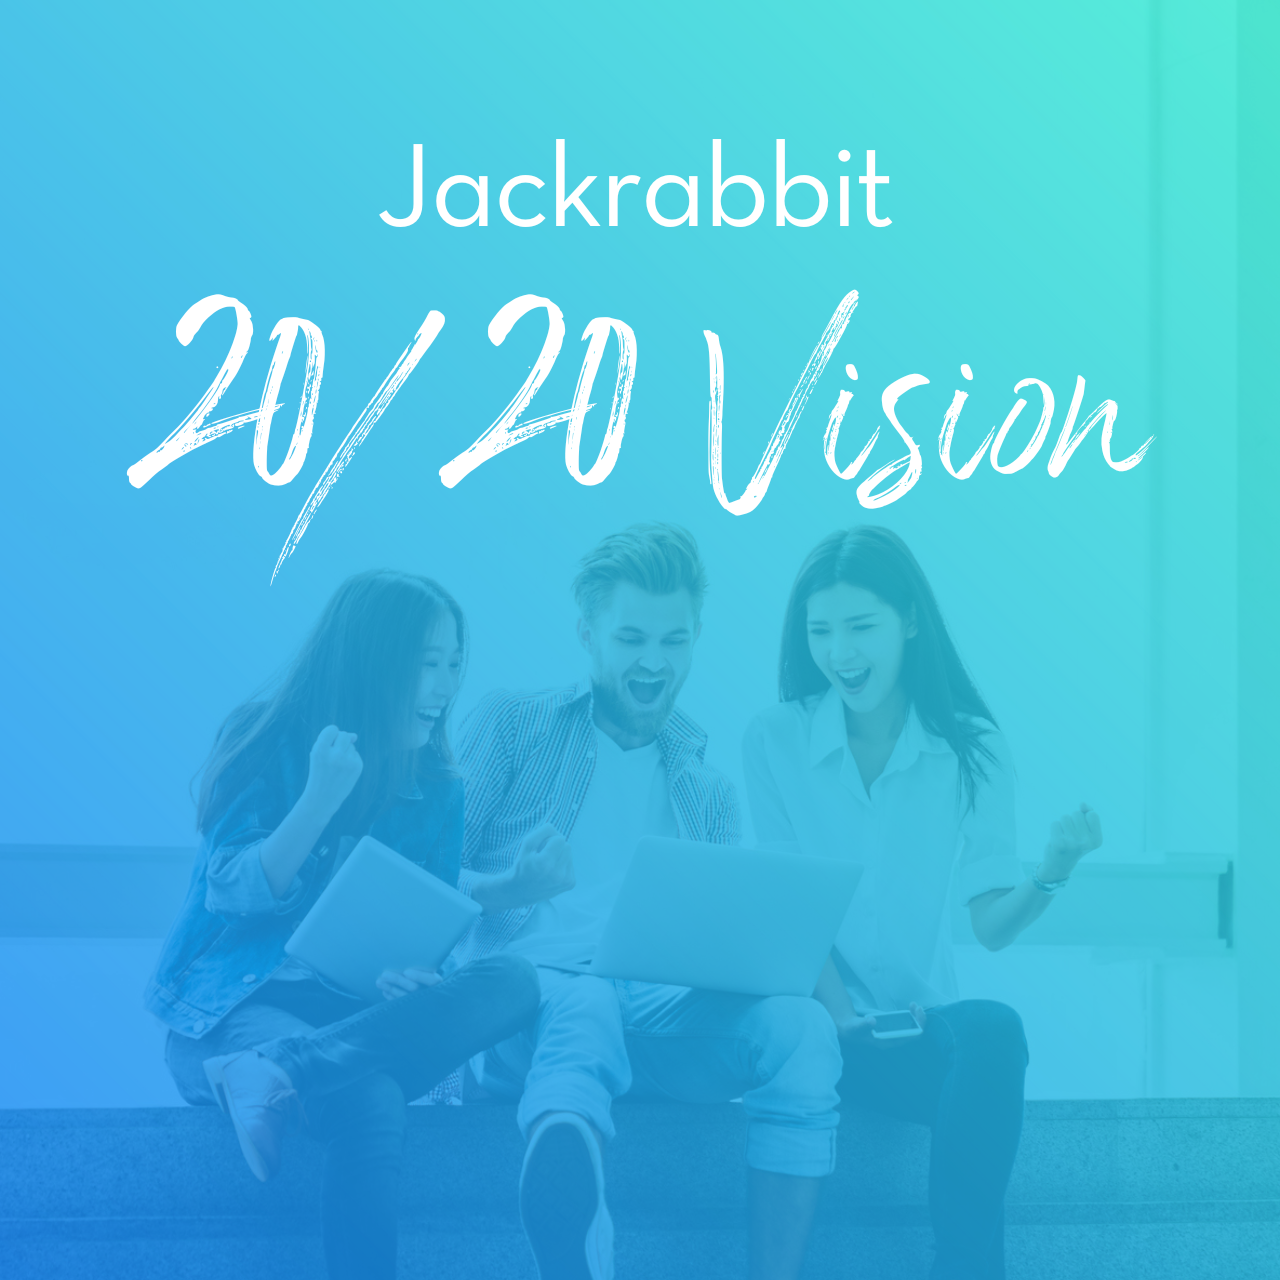 Jackrabbit Technologies Reveals 20:20 Vision